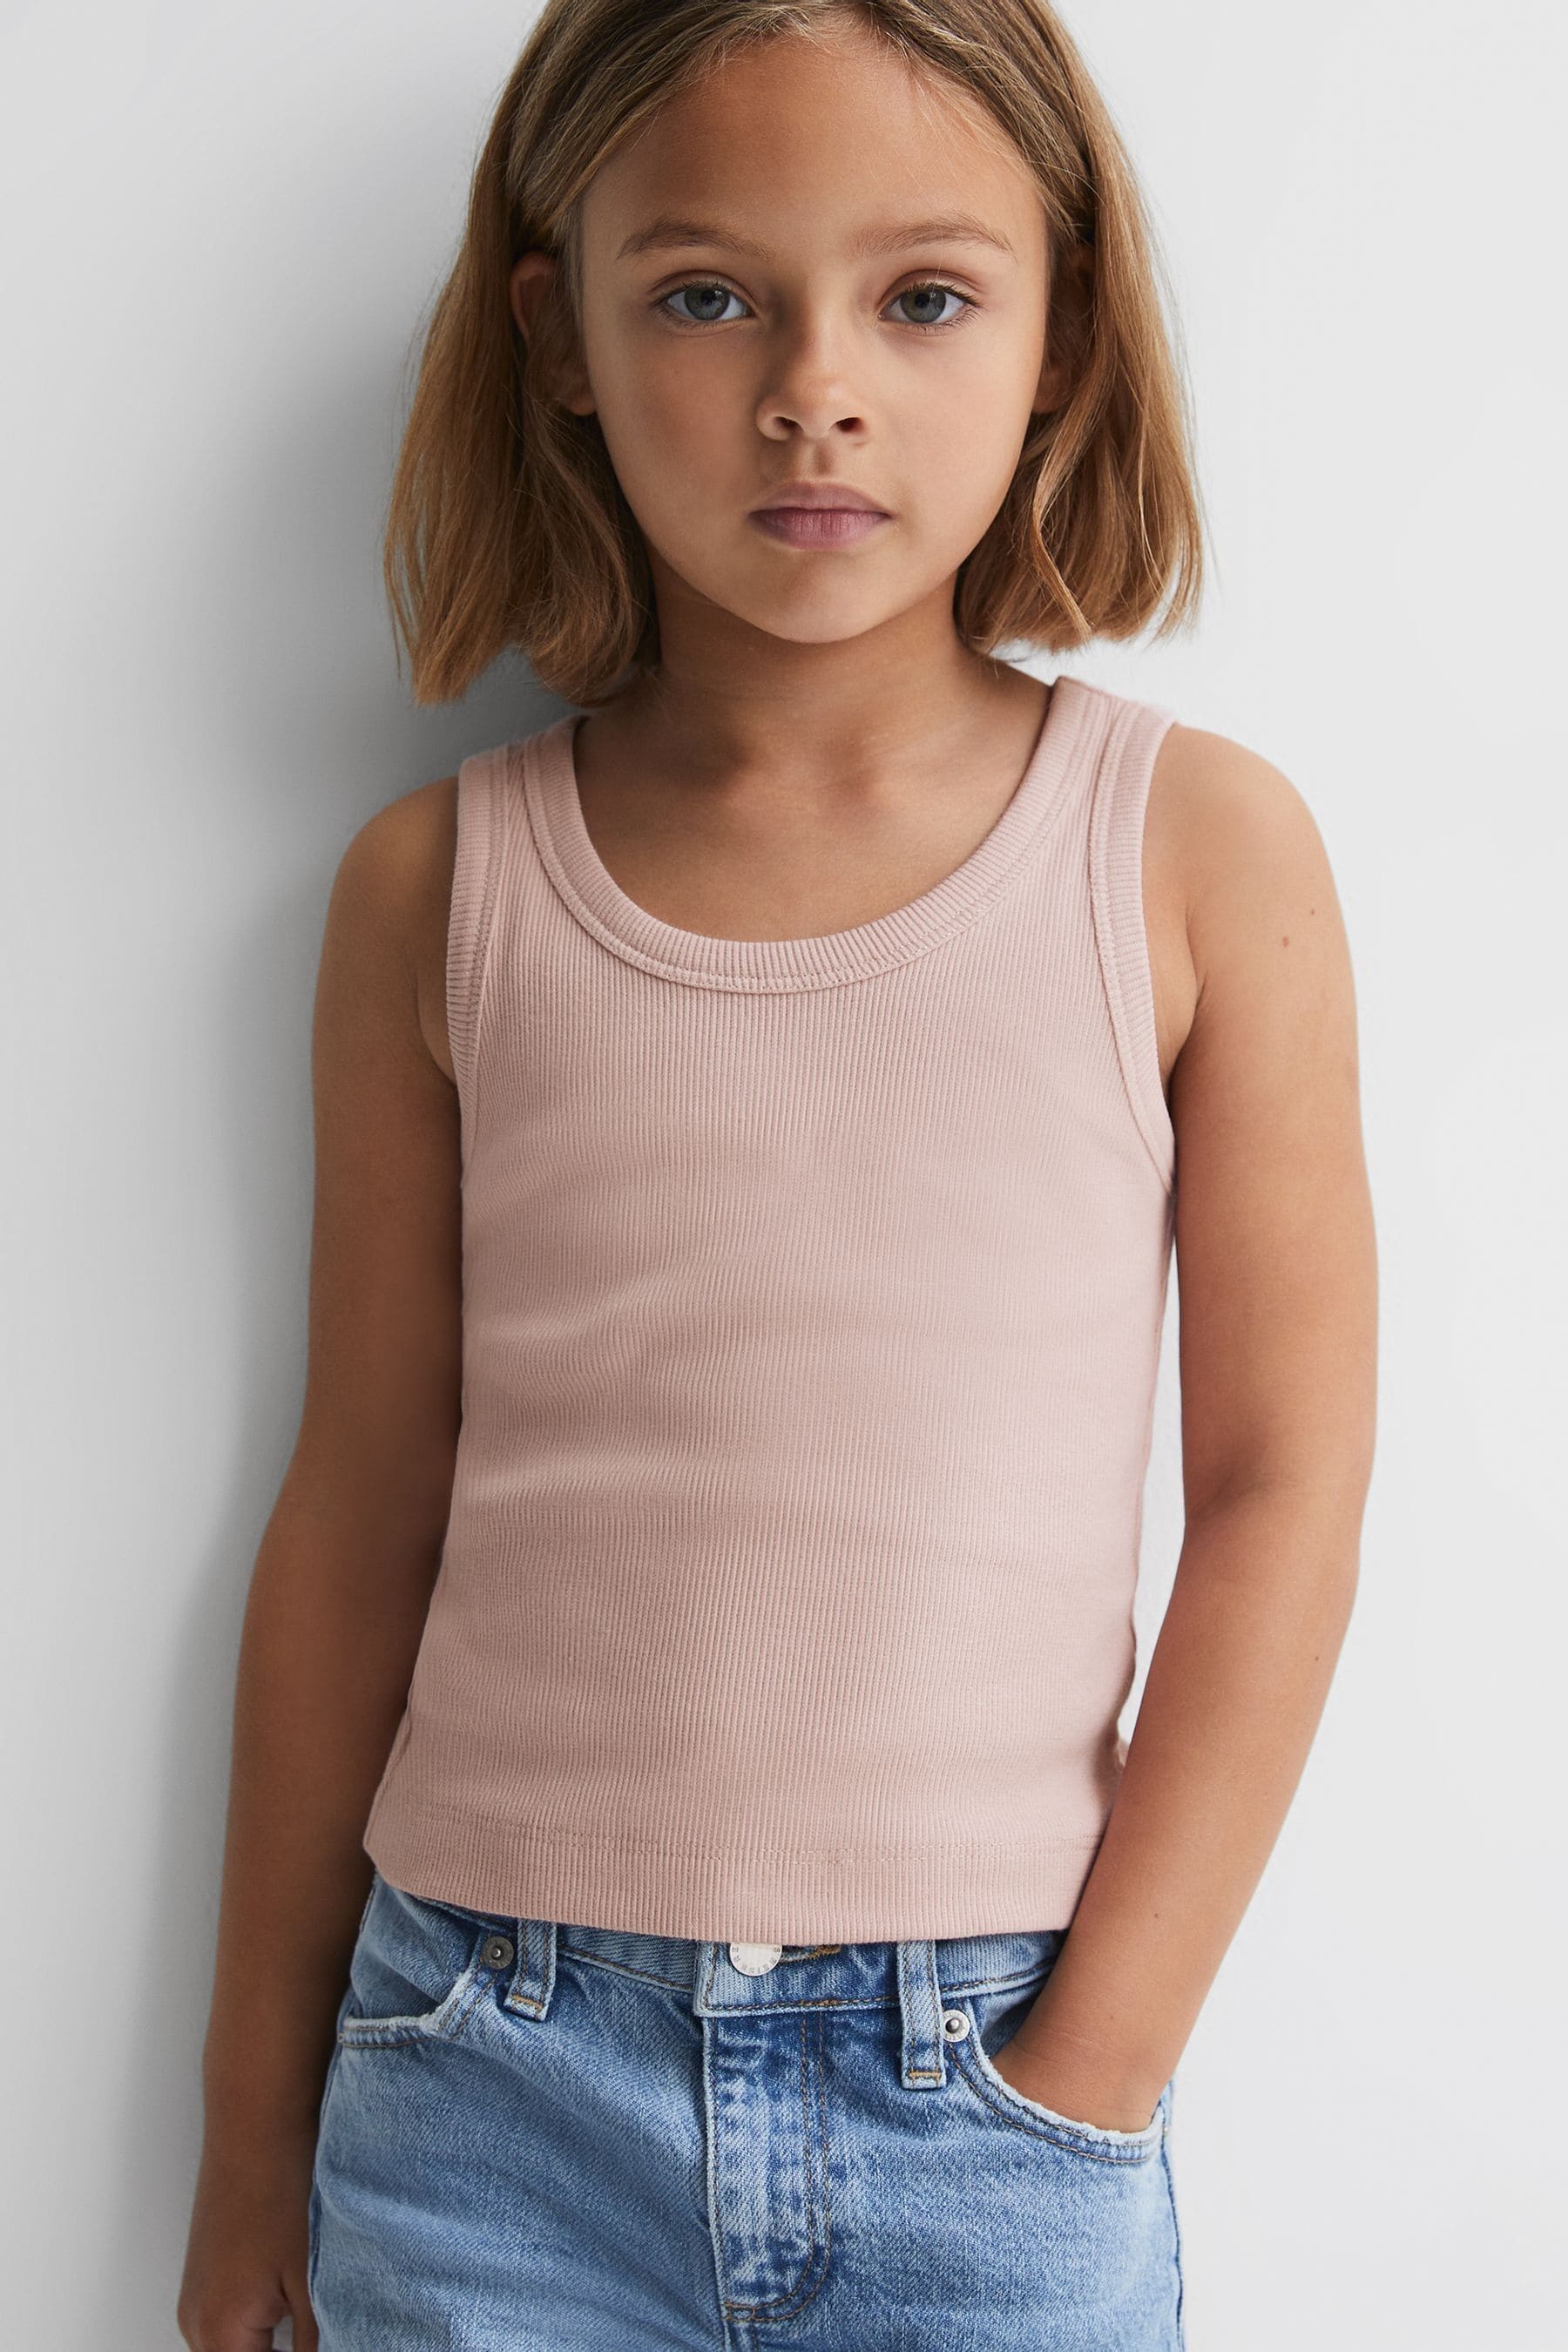 Reiss Kids' Violet - Pale Pink Junior Cotton Blend Ribbed Vest, Age 4-5 Years